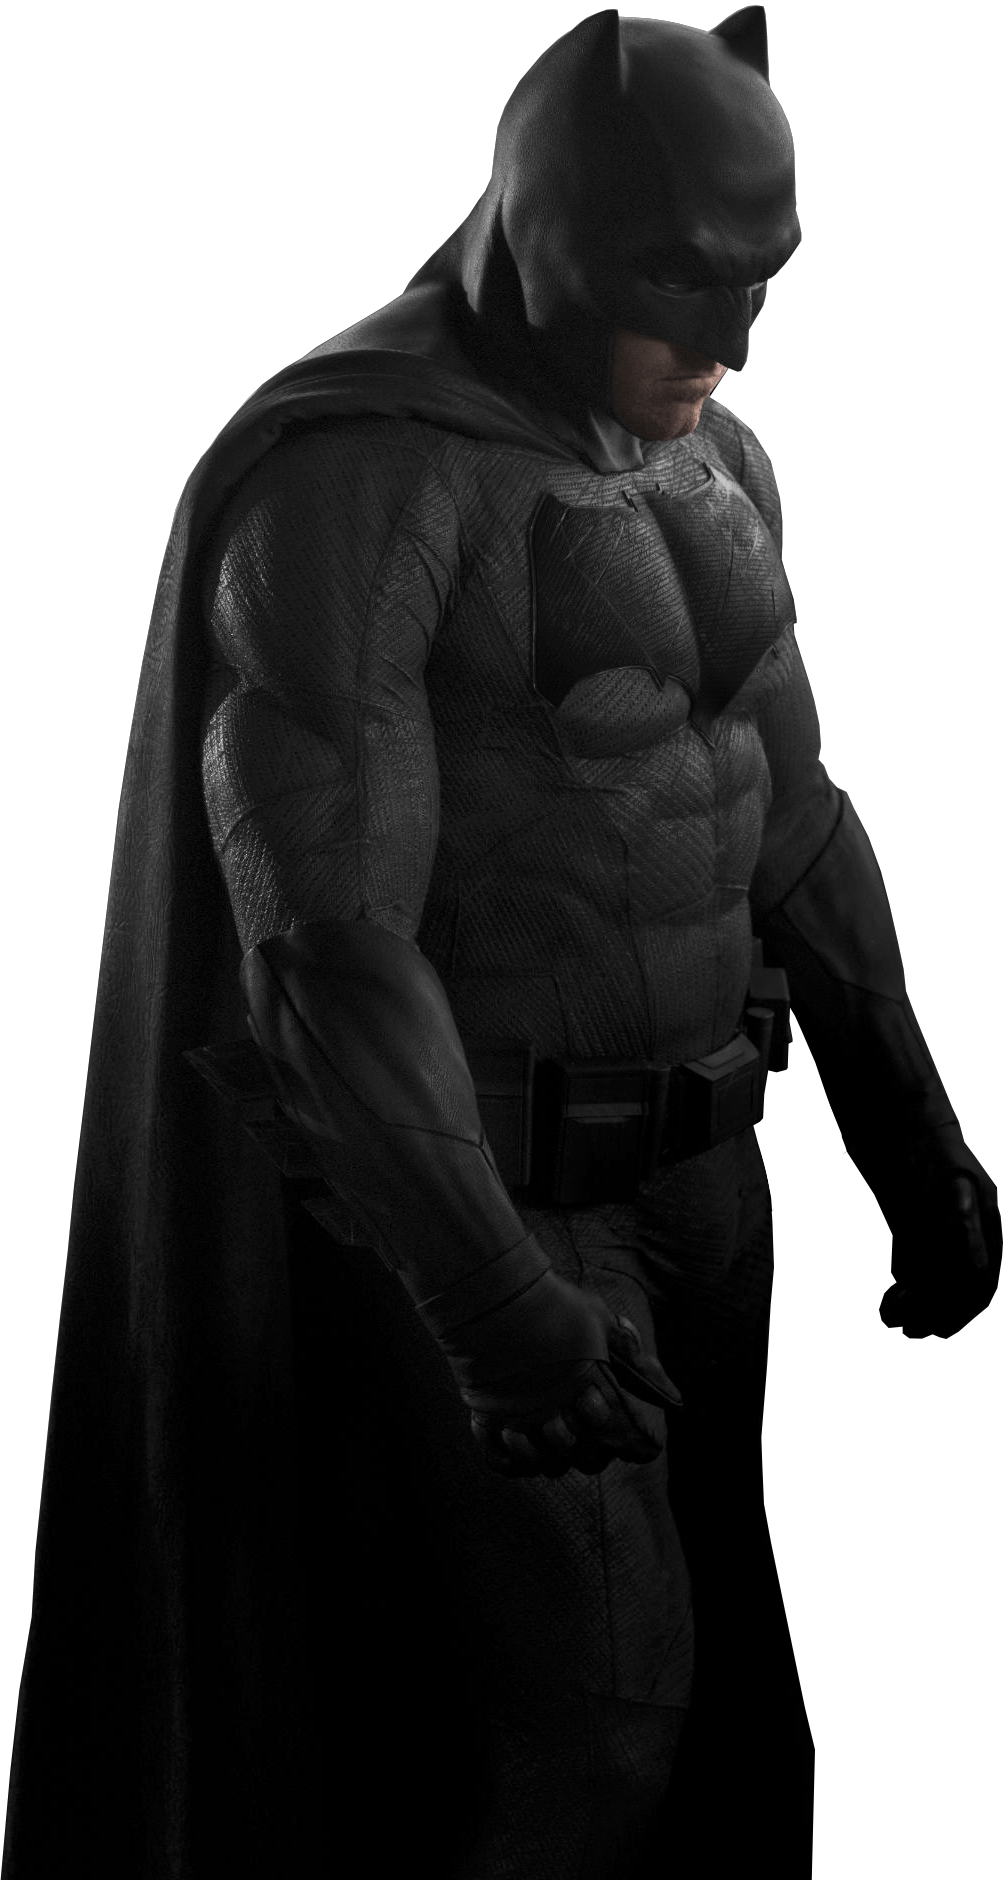 Free Ben Affleck Batman Png Download Free Clip Art Free Clip Art On Clipart Library